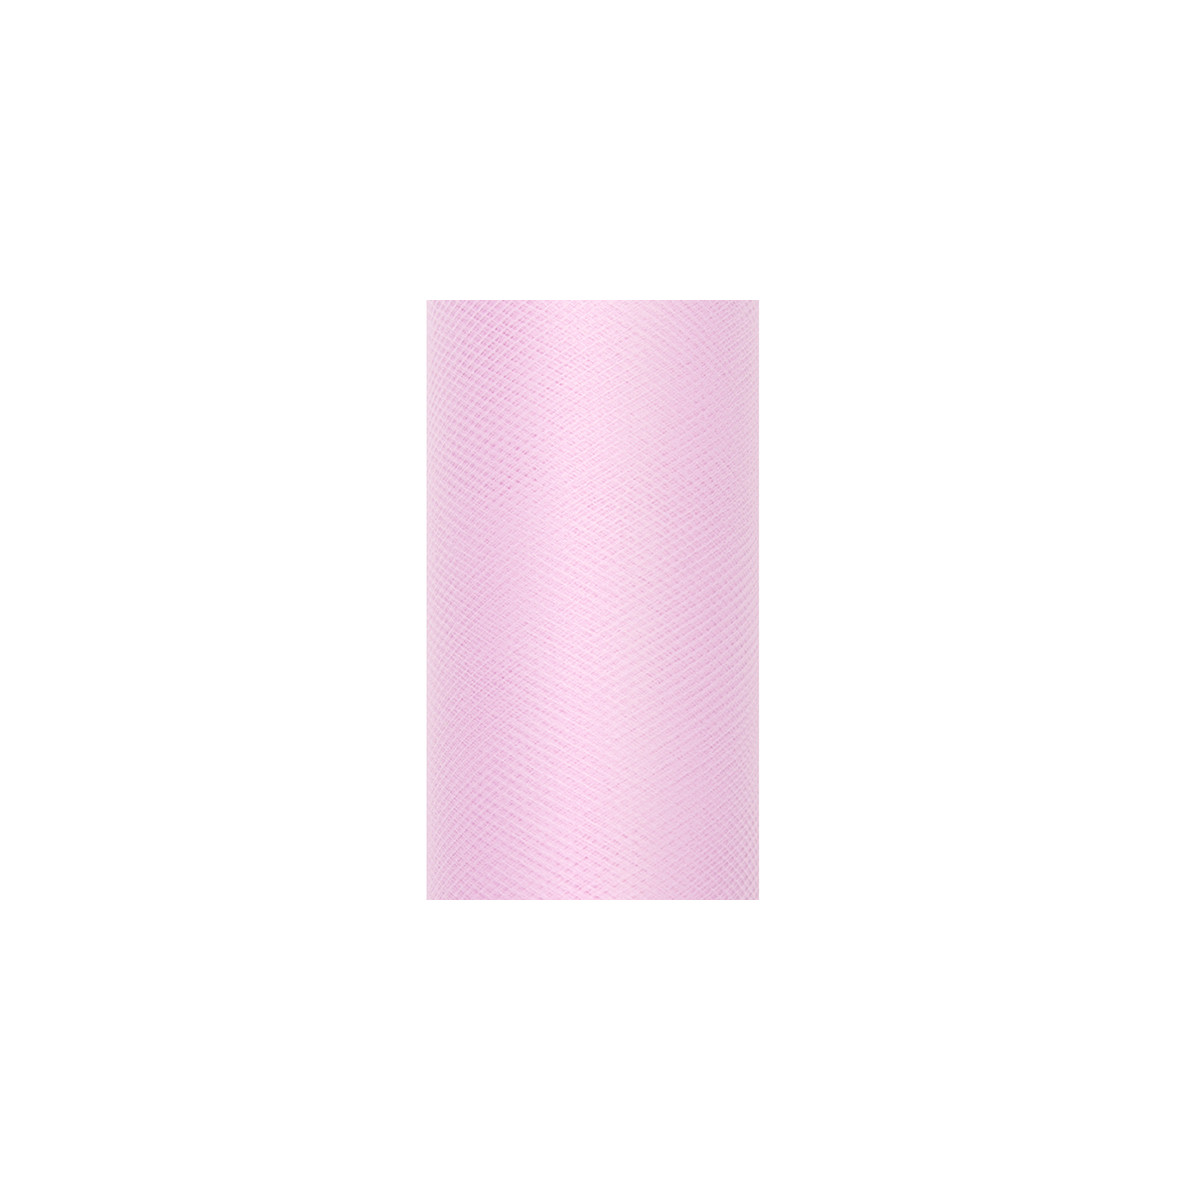 Rouleau Tulle rose clair 9 m x 8 cm